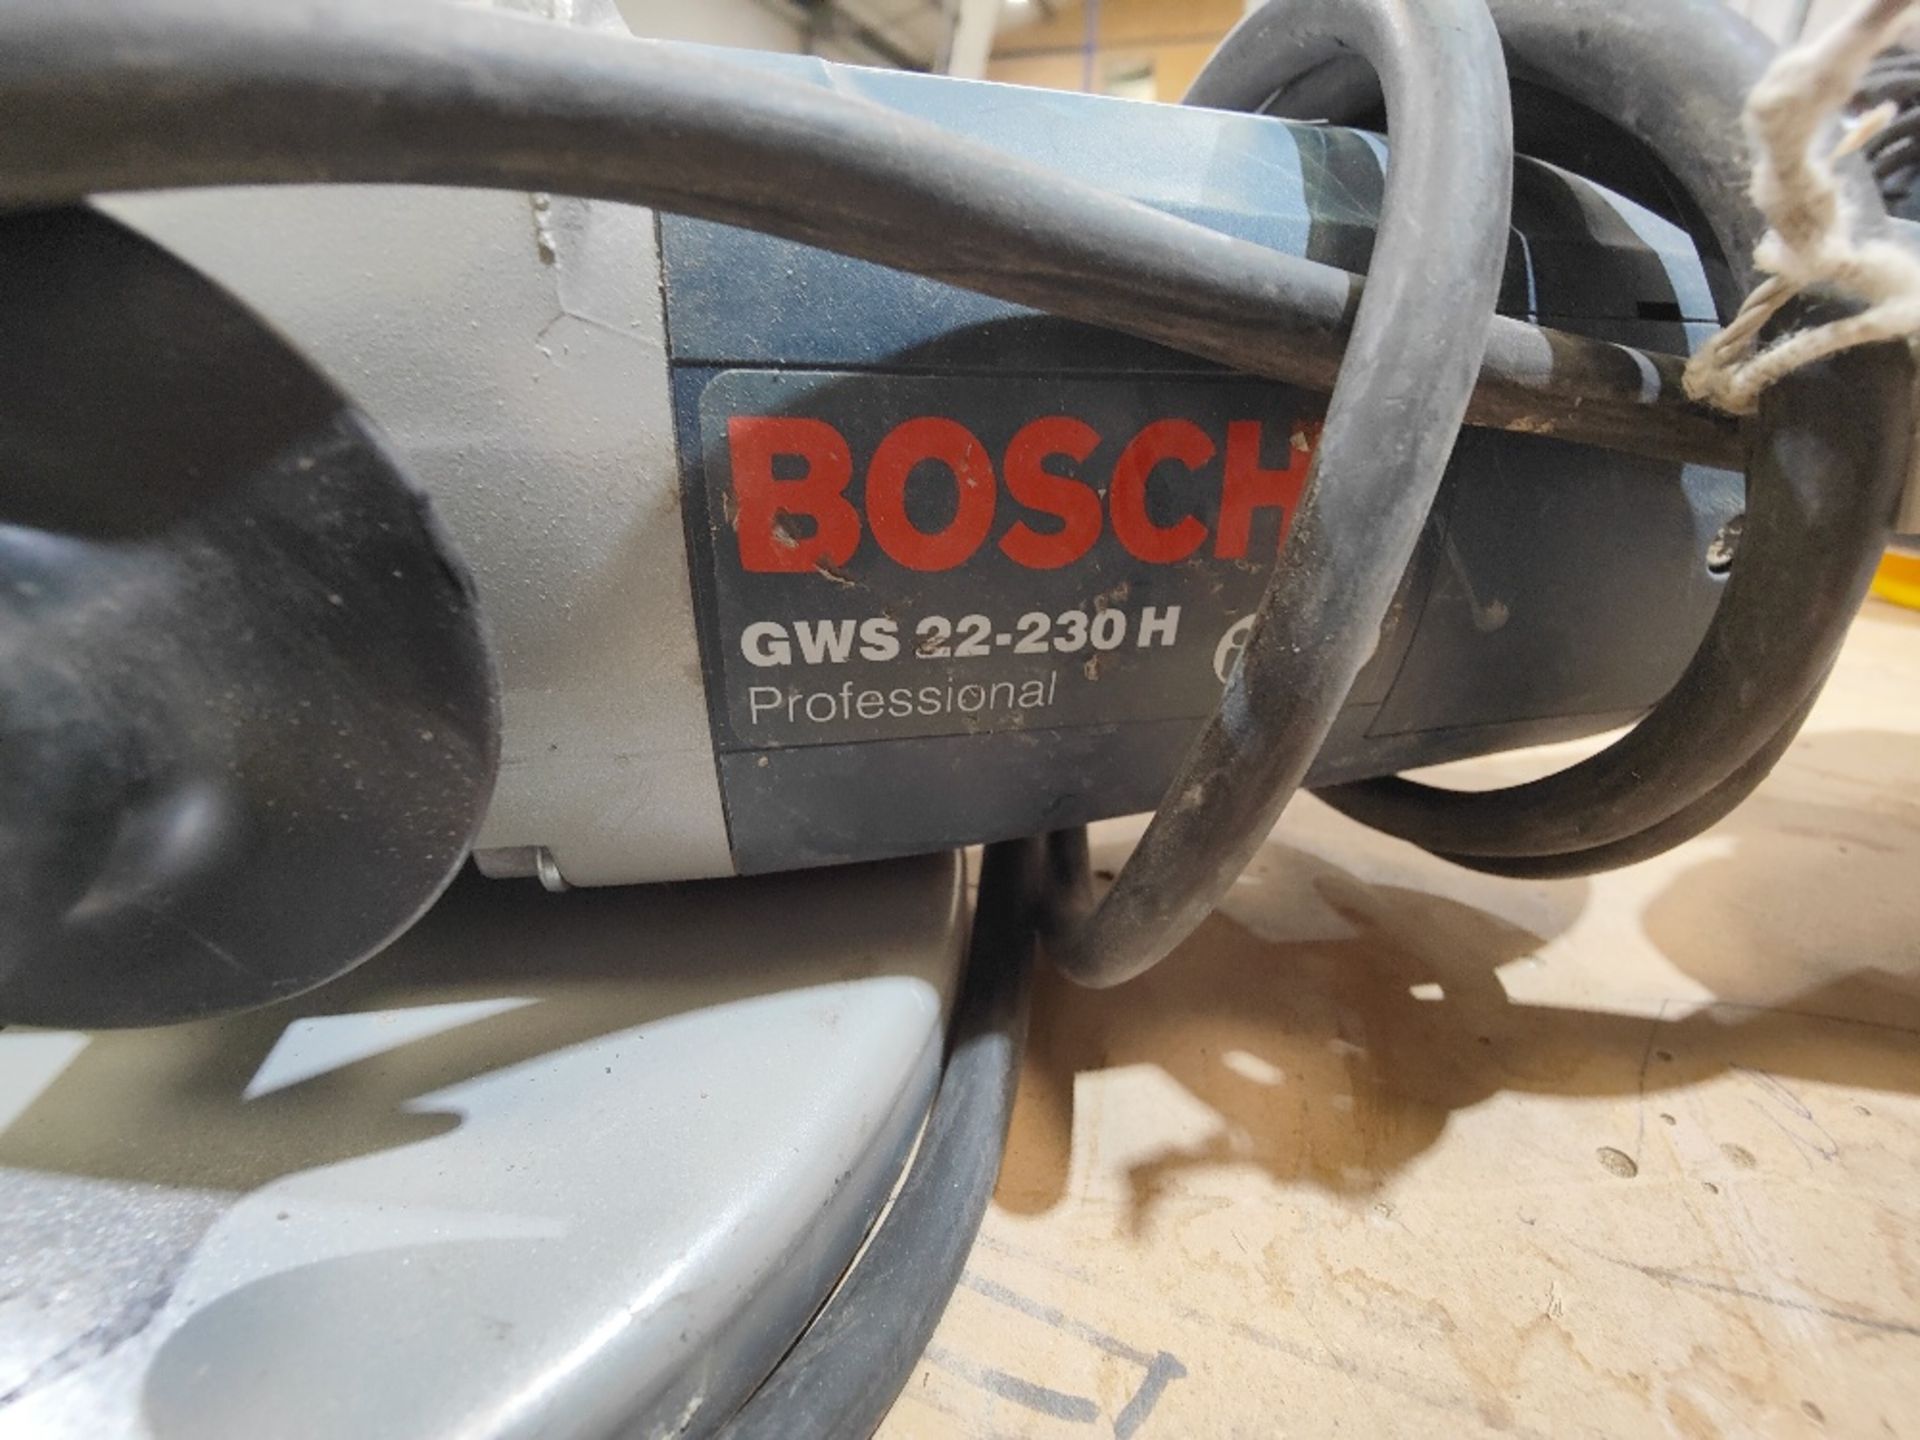 Bosch Professional GWS 22-230H 9 inch 110V angle grinder - Image 4 of 4